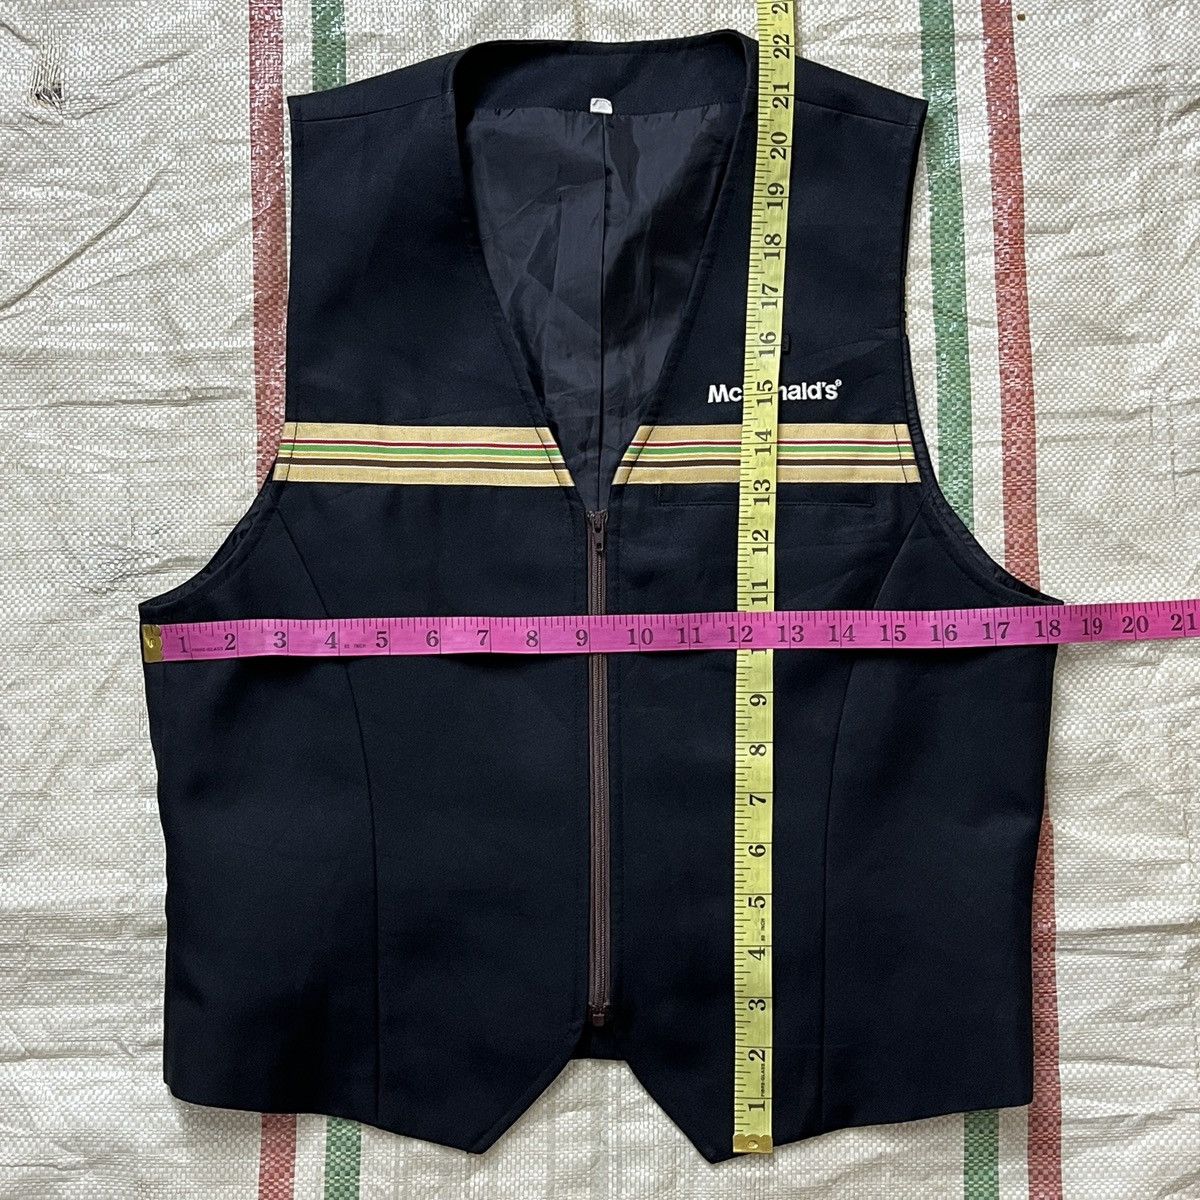 Rare McDonalds Japan Vintage Workers Vest Collector Item - 4